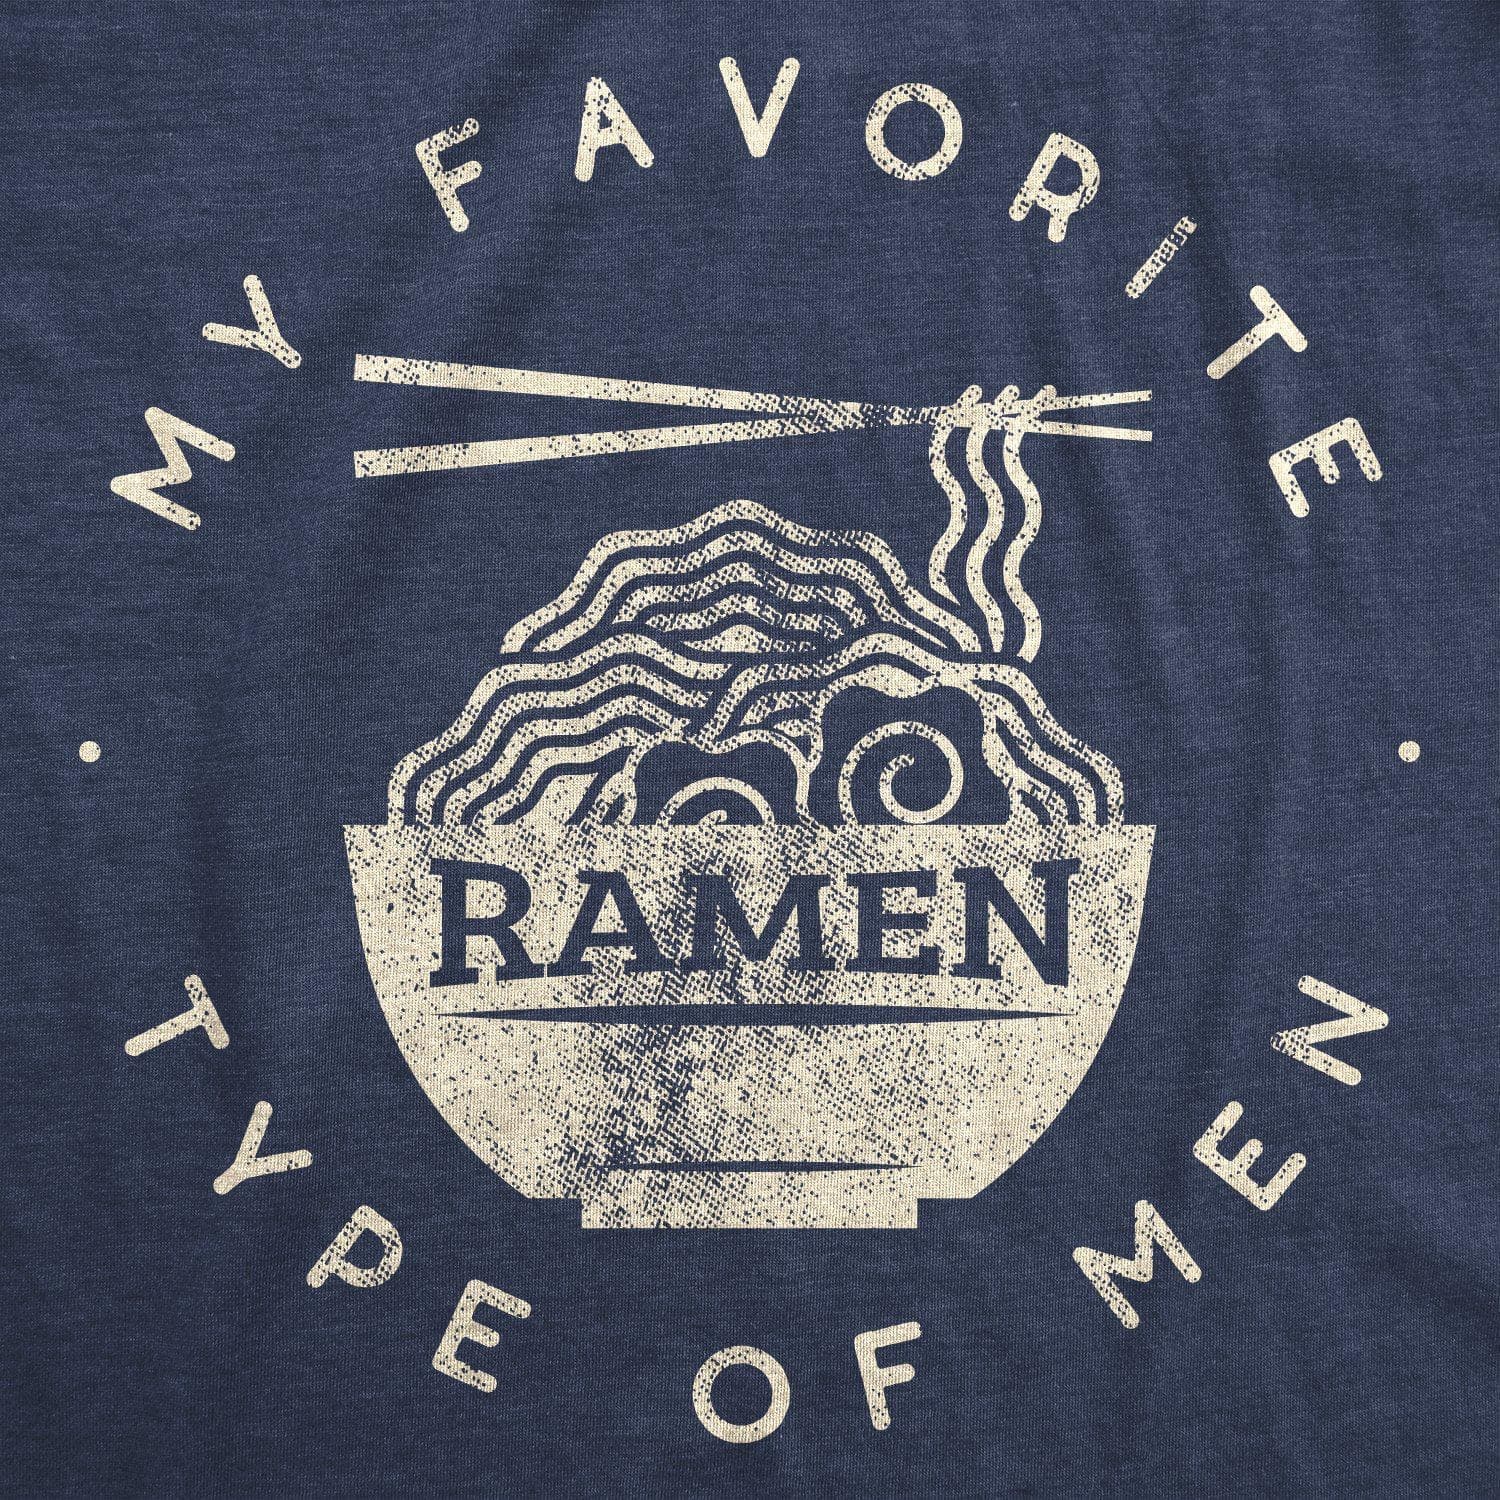 My Favorite Type Of Ramen Is Men Women's Tshirt  -  Crazy Dog T-Shirts